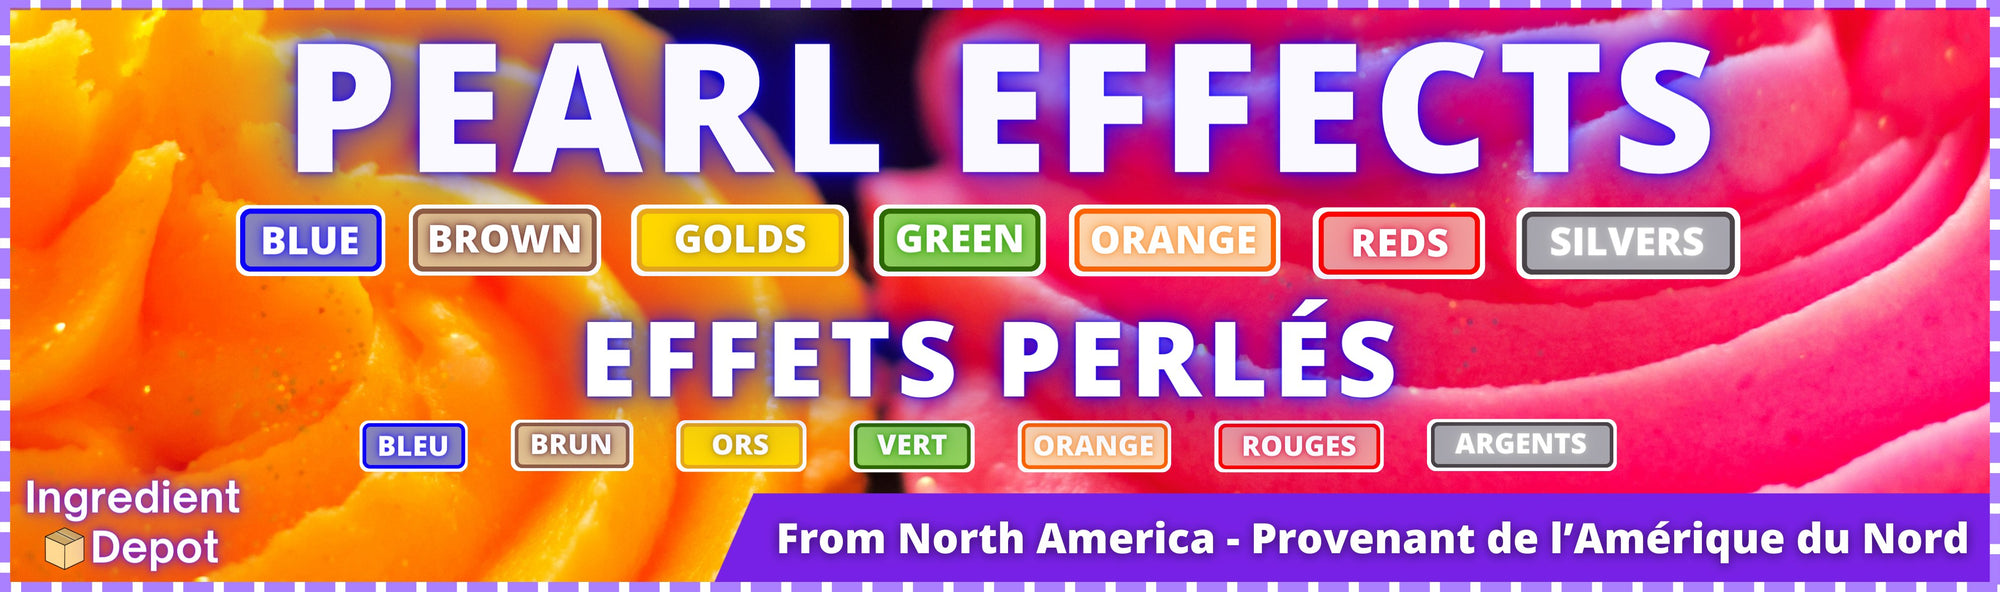 Ingredient Depot Pearl Effect Colors